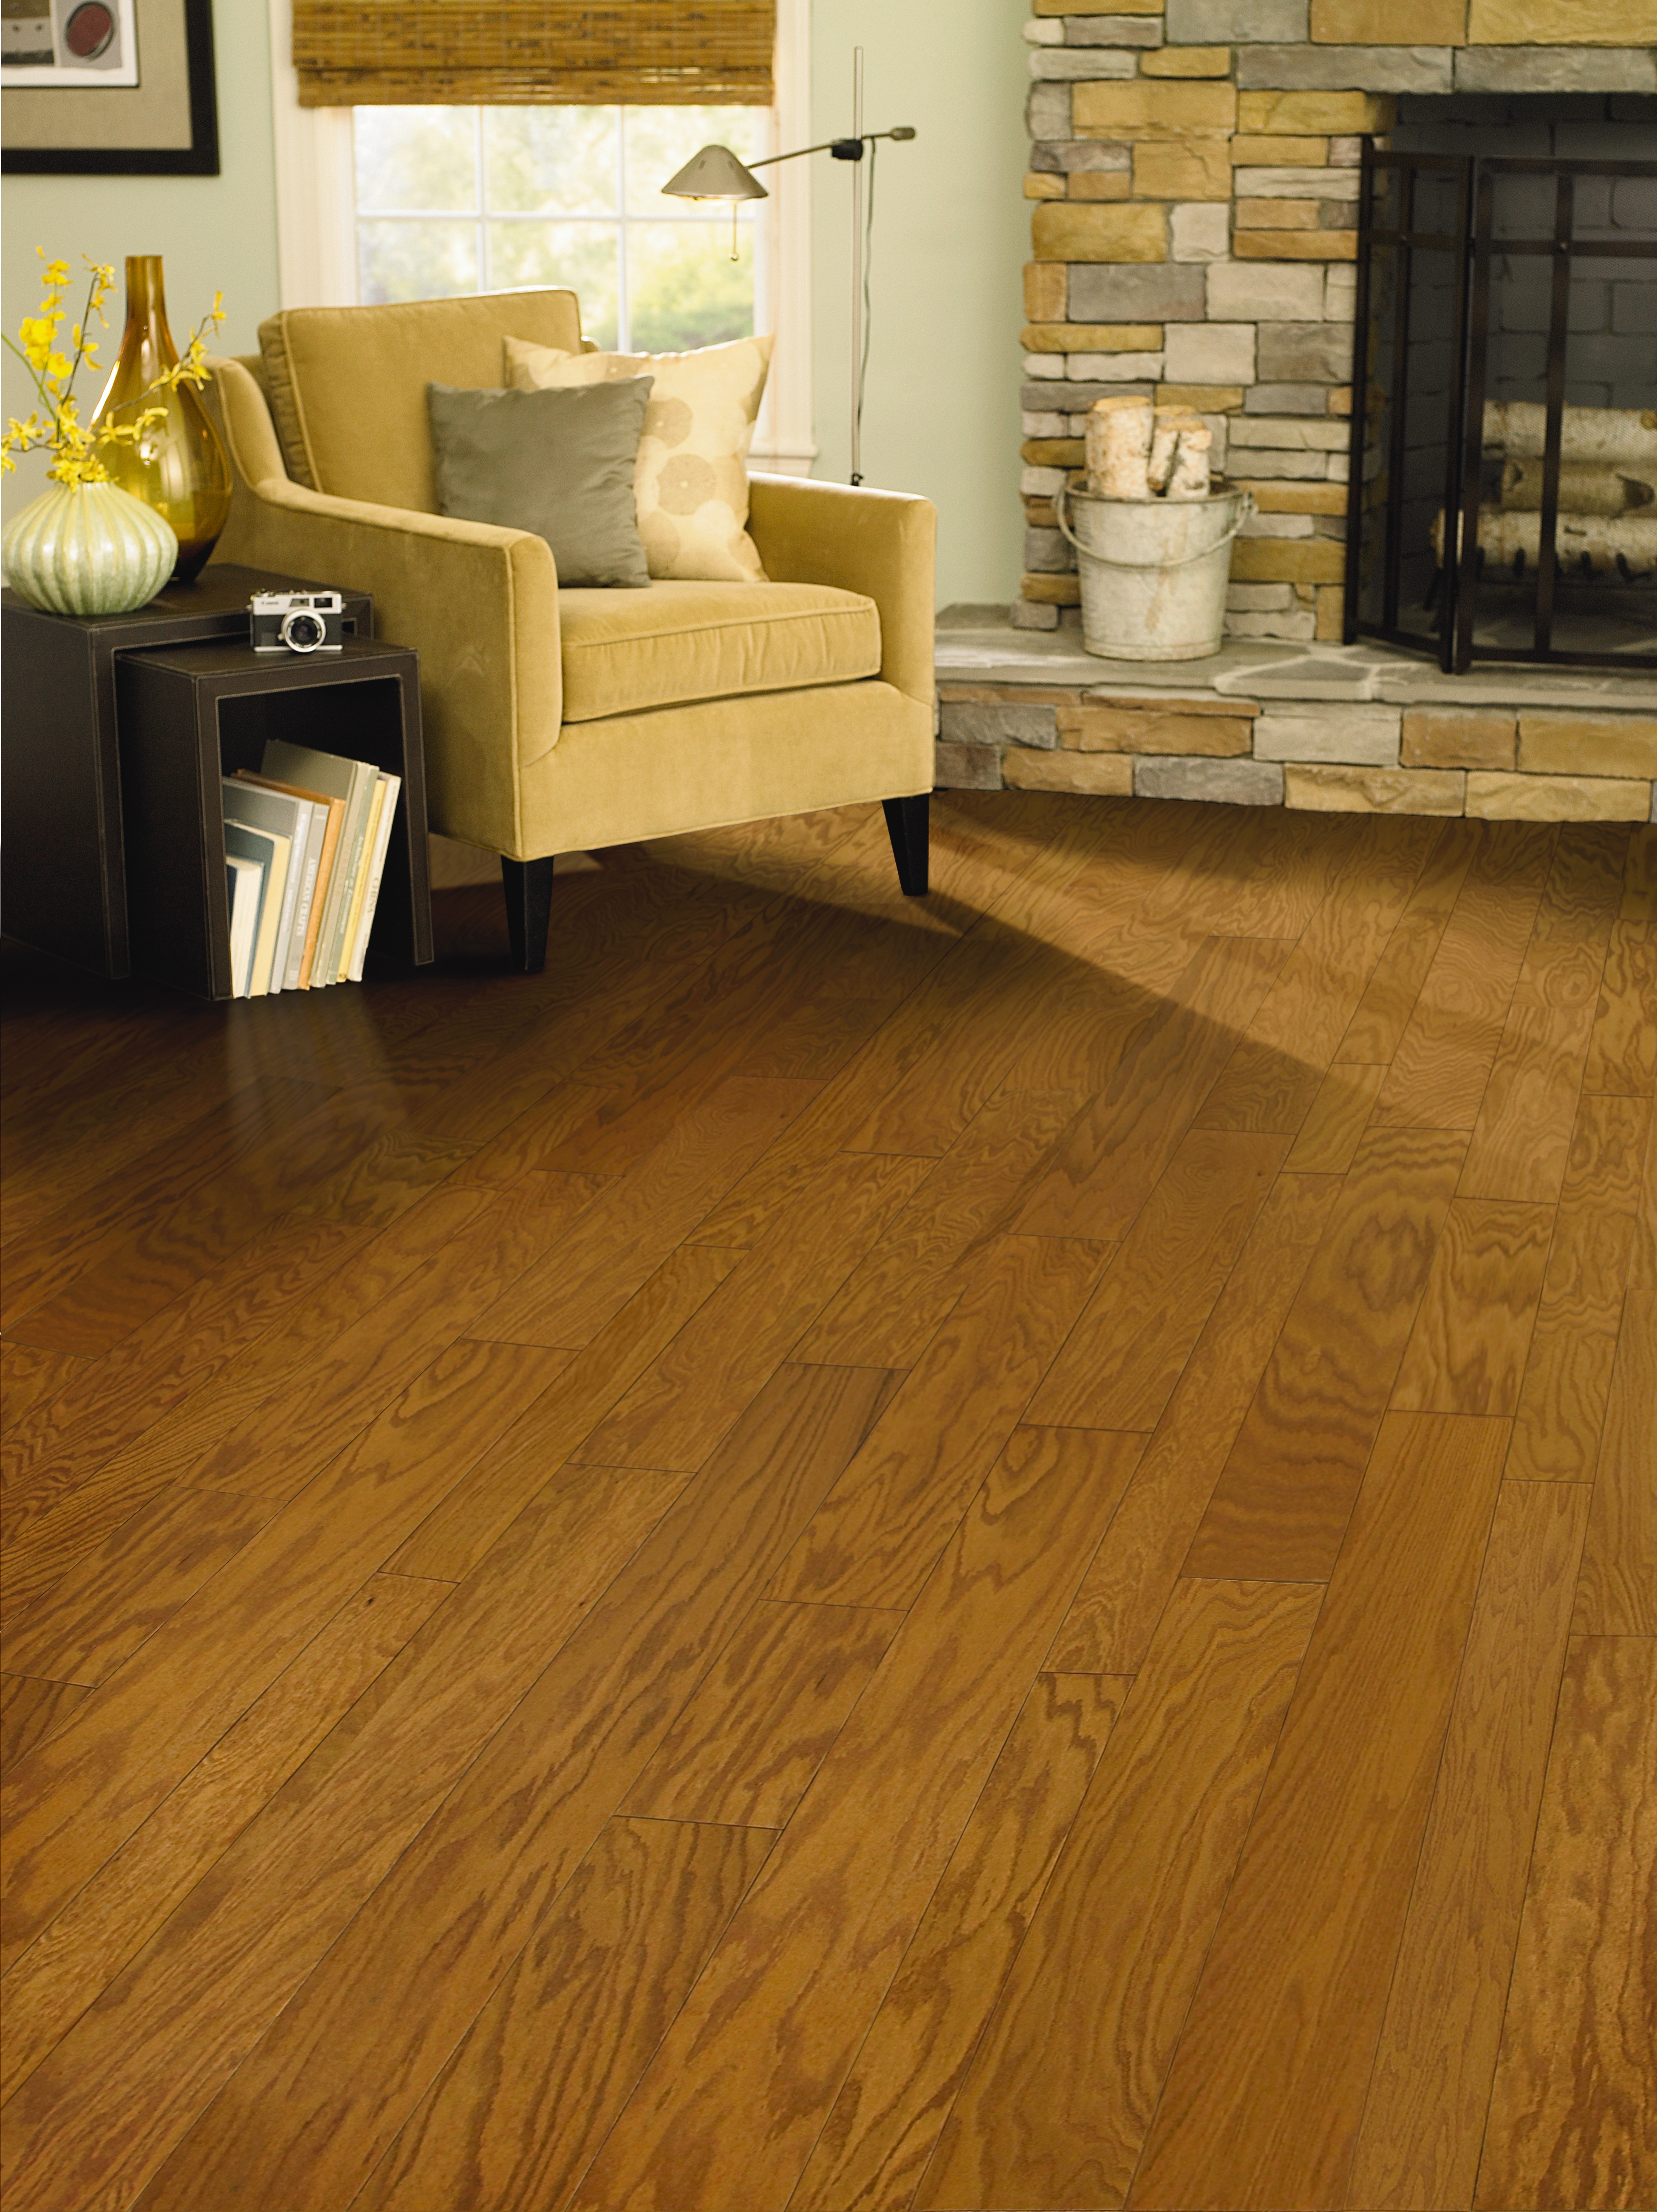 Is Hardwood Flooring Really That High Maintenance? 4